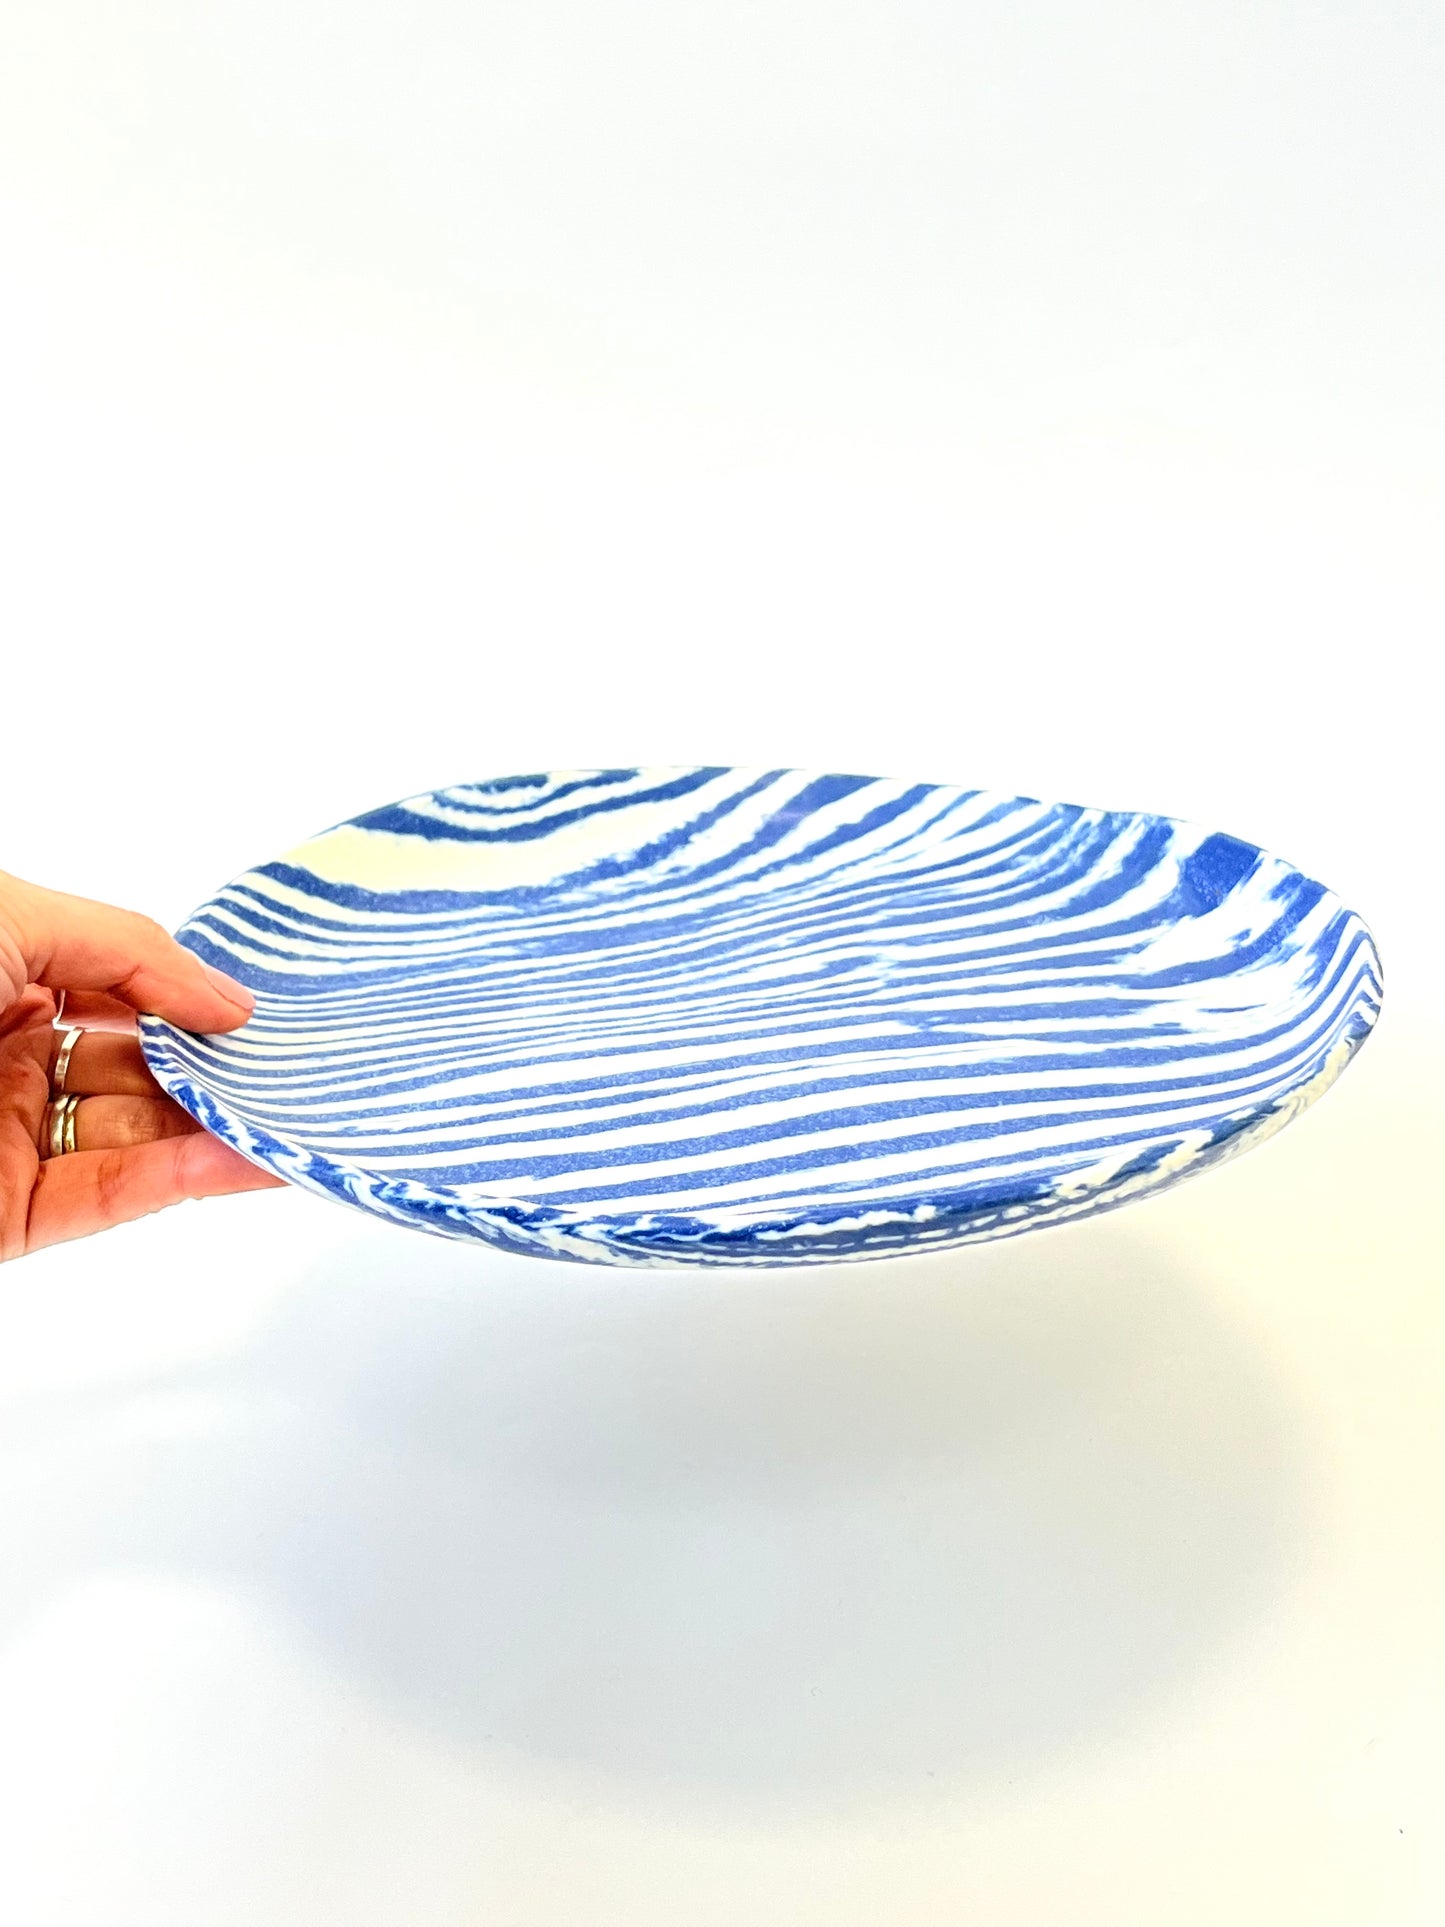 Ceramic Nerikomi Plate - Large - Dark Blue Stripe